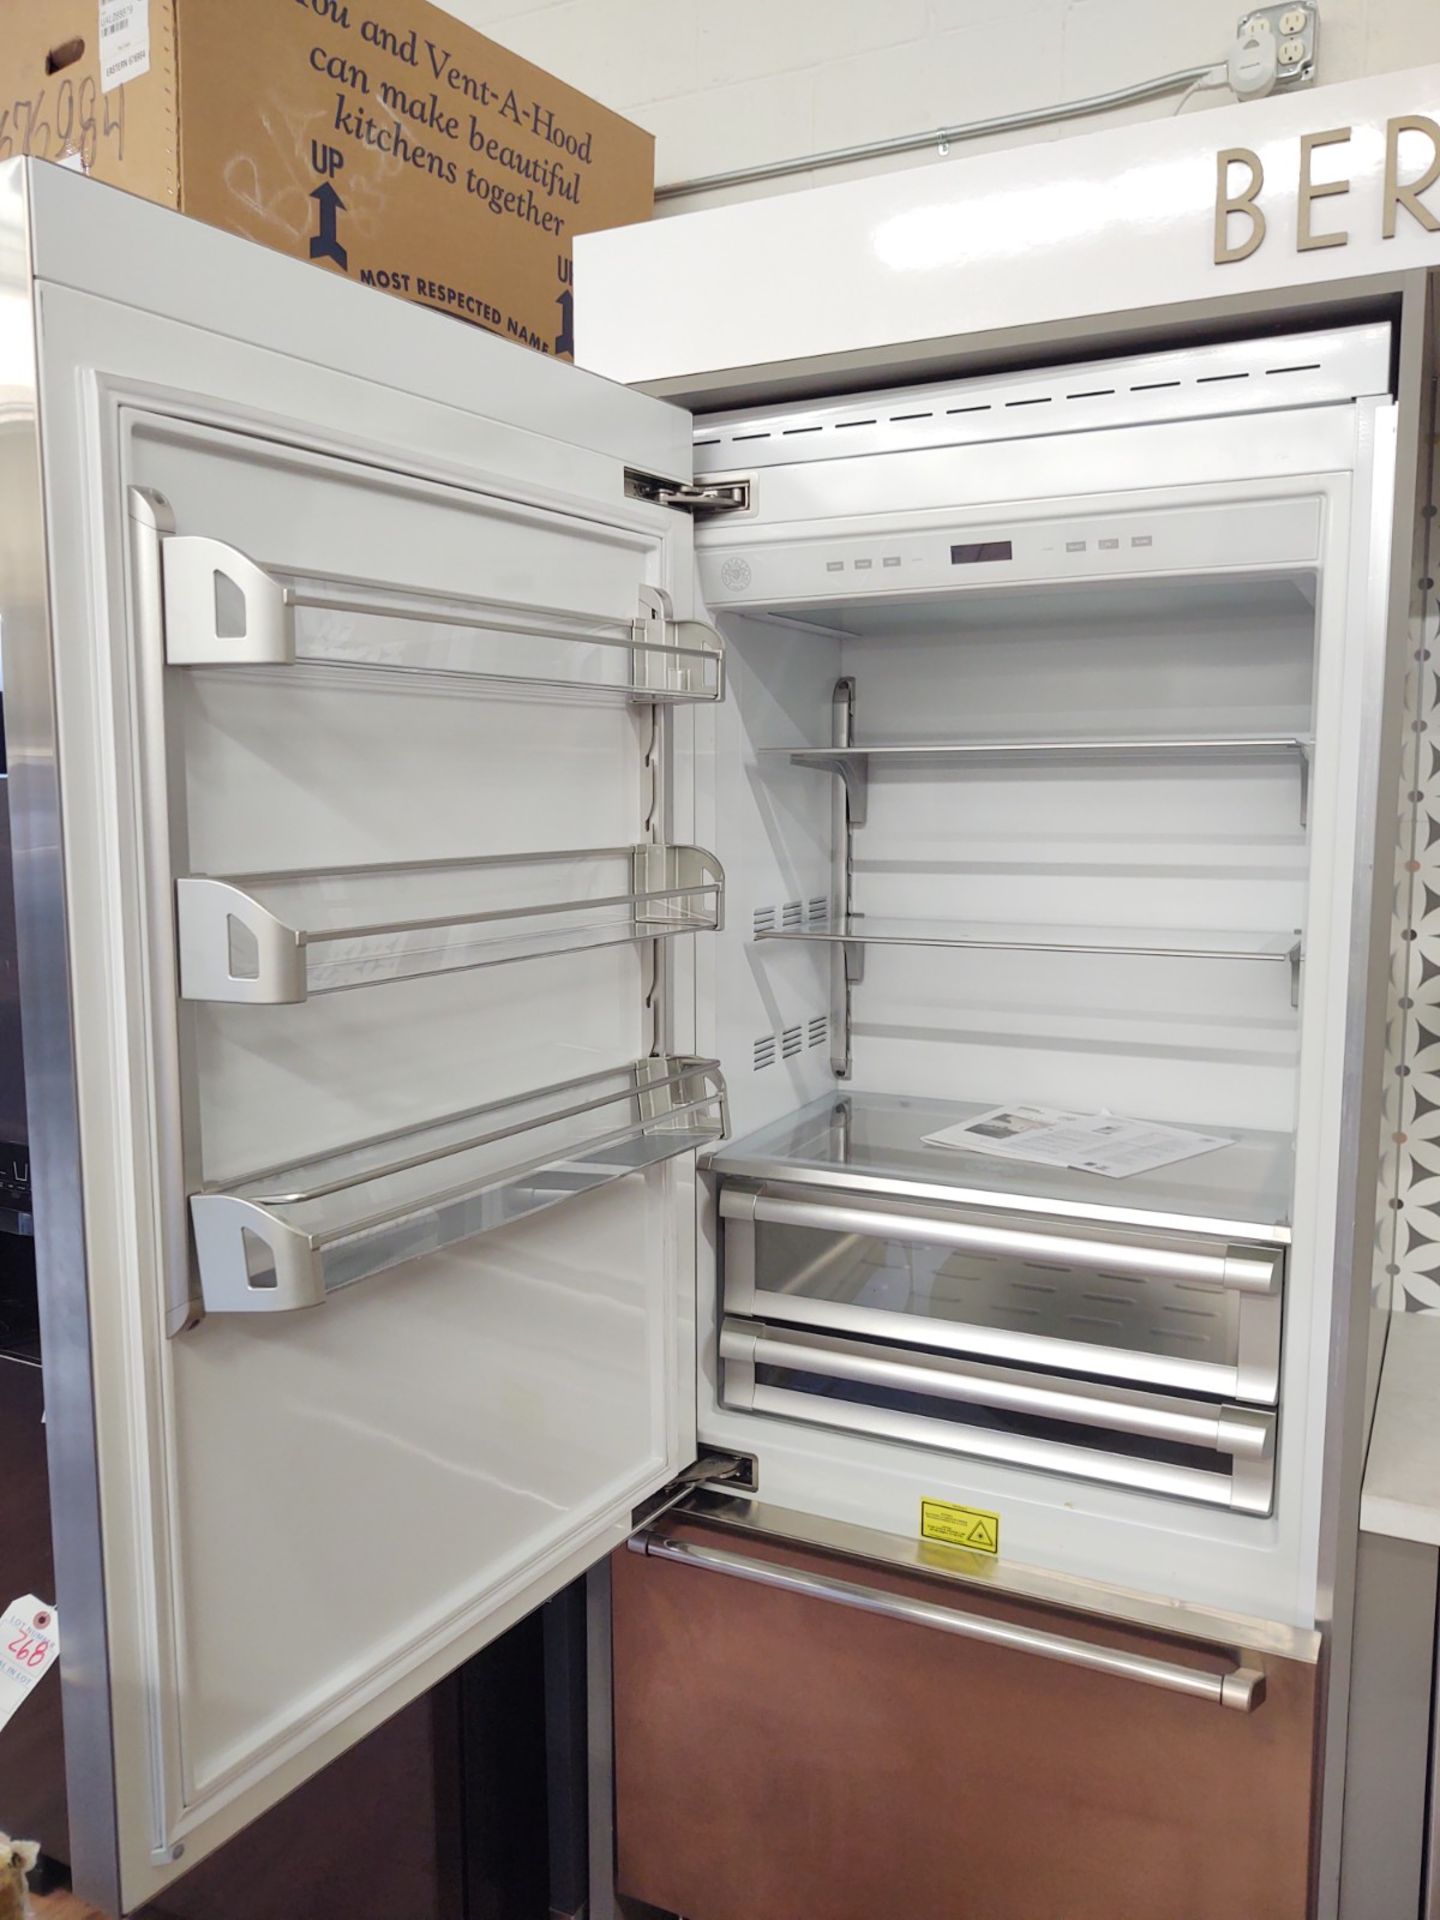 Bertazzoni 36" SS Freestanding French door Refrigerator #REF36DFZXNT, 83"H, (Missing Kick Panel) - Image 2 of 4